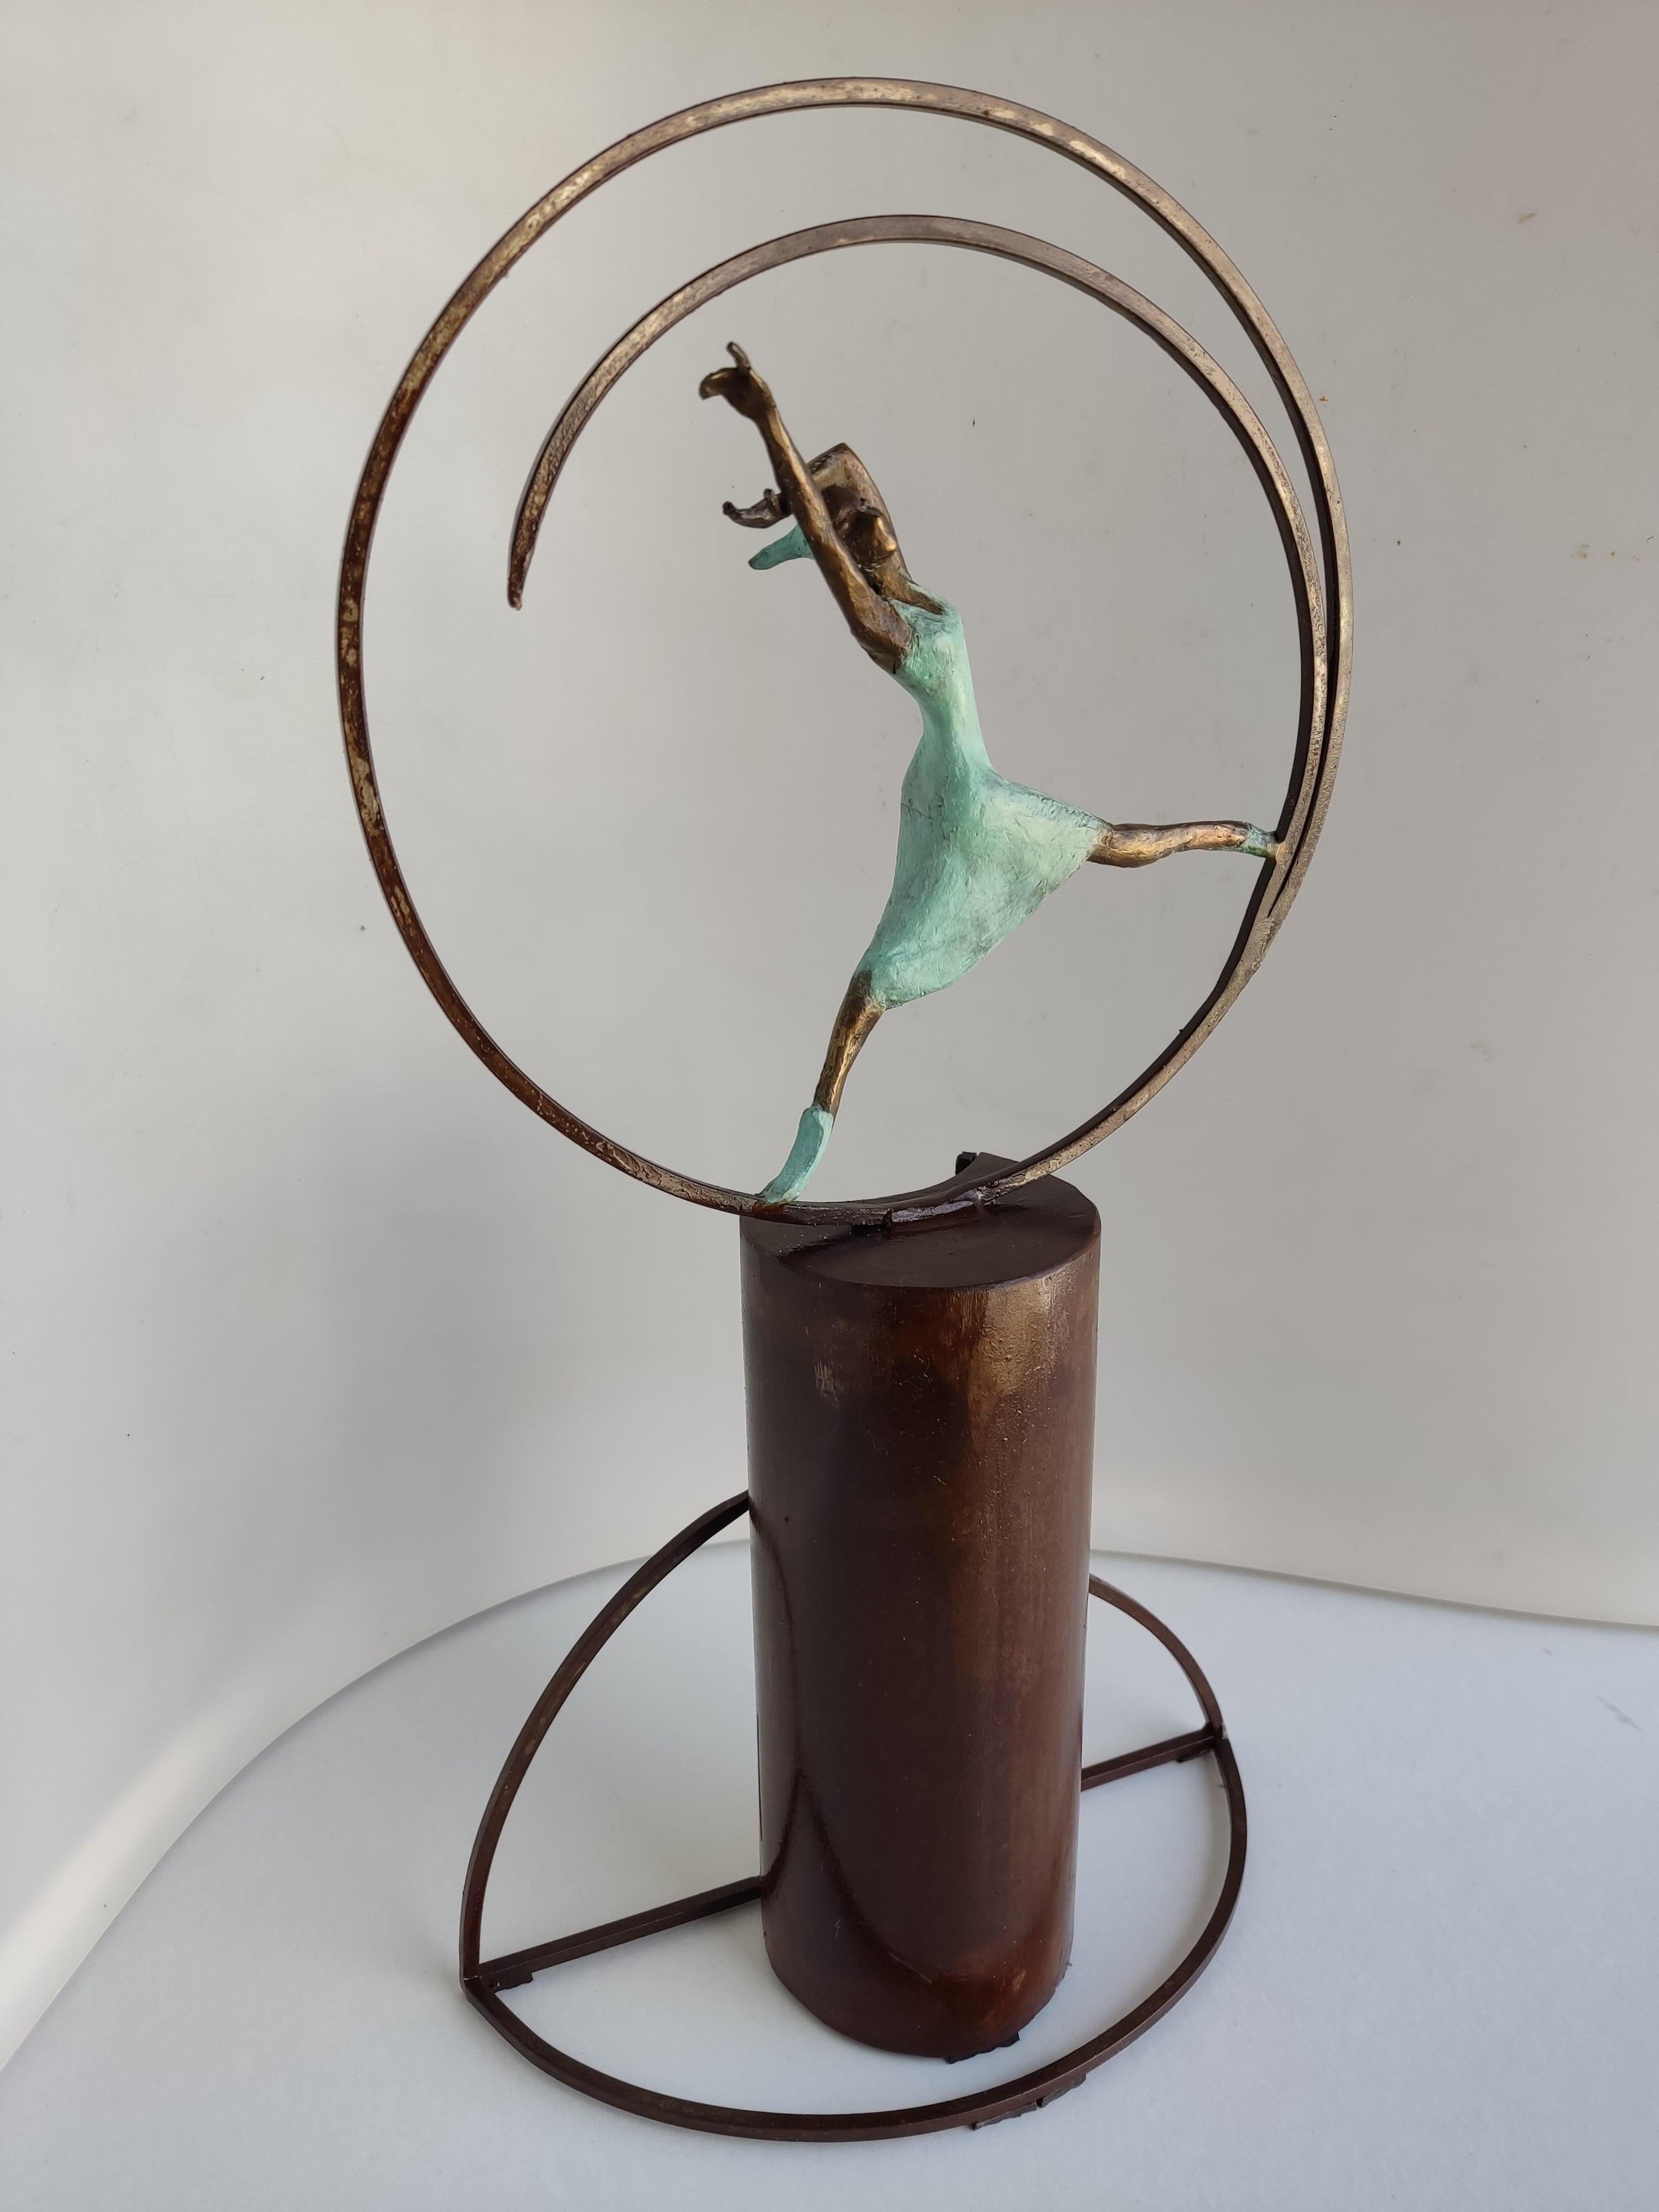 Joan Artigas Planas Figurative Sculpture - "Pina Bausch " contemporary bronze mural,  table sculpture figurative dancing